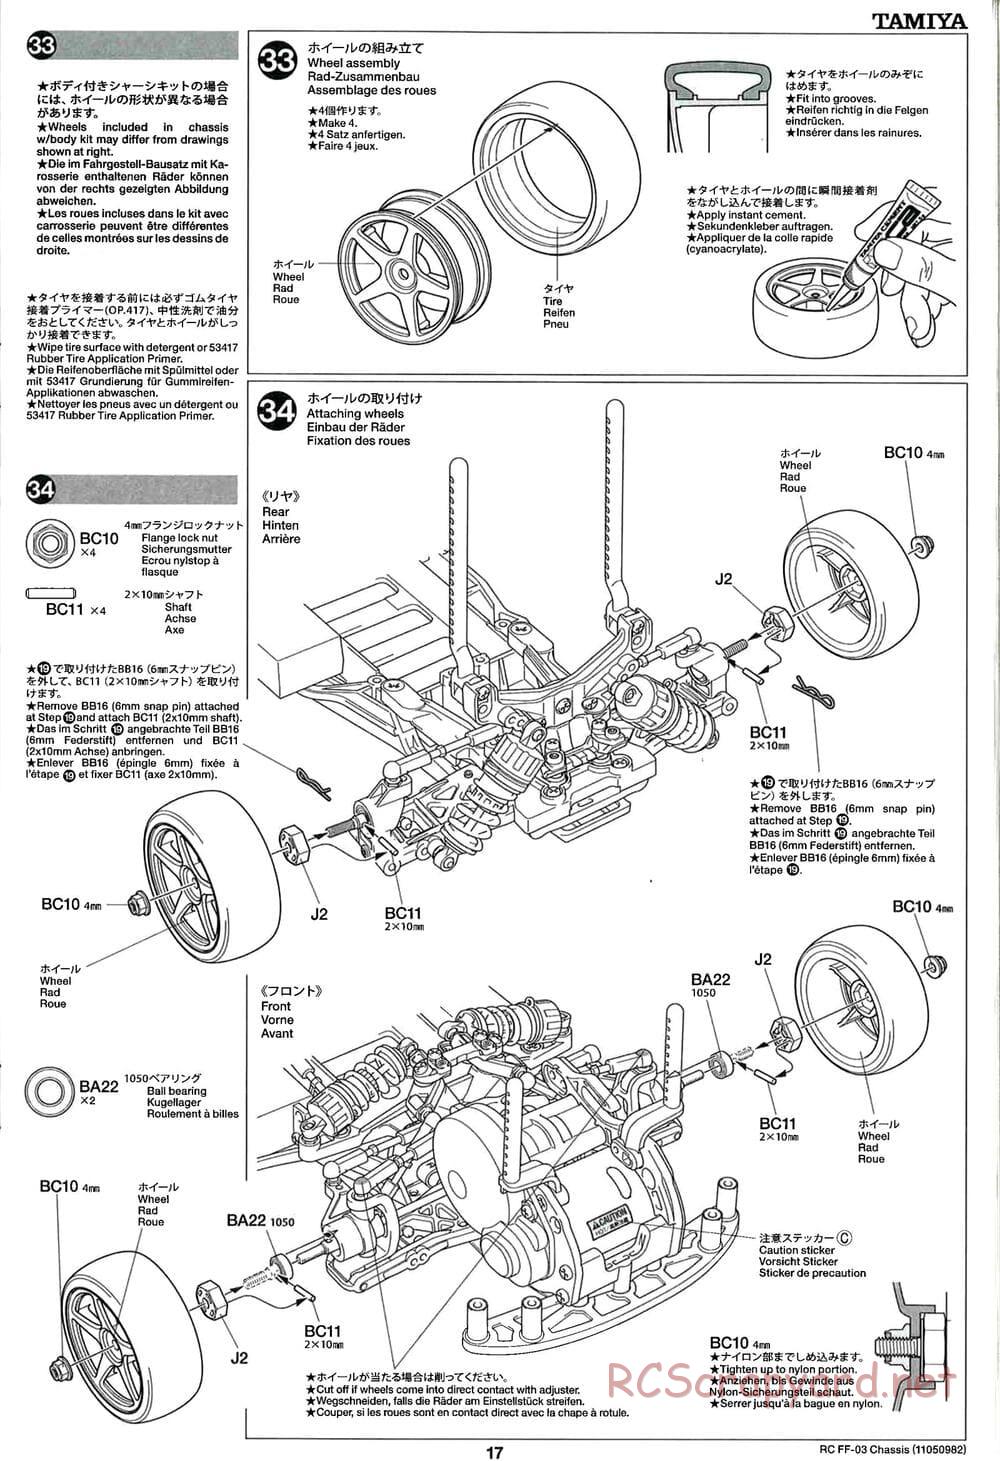 Tamiya - FF-03 Chassis - Manual - Page 17